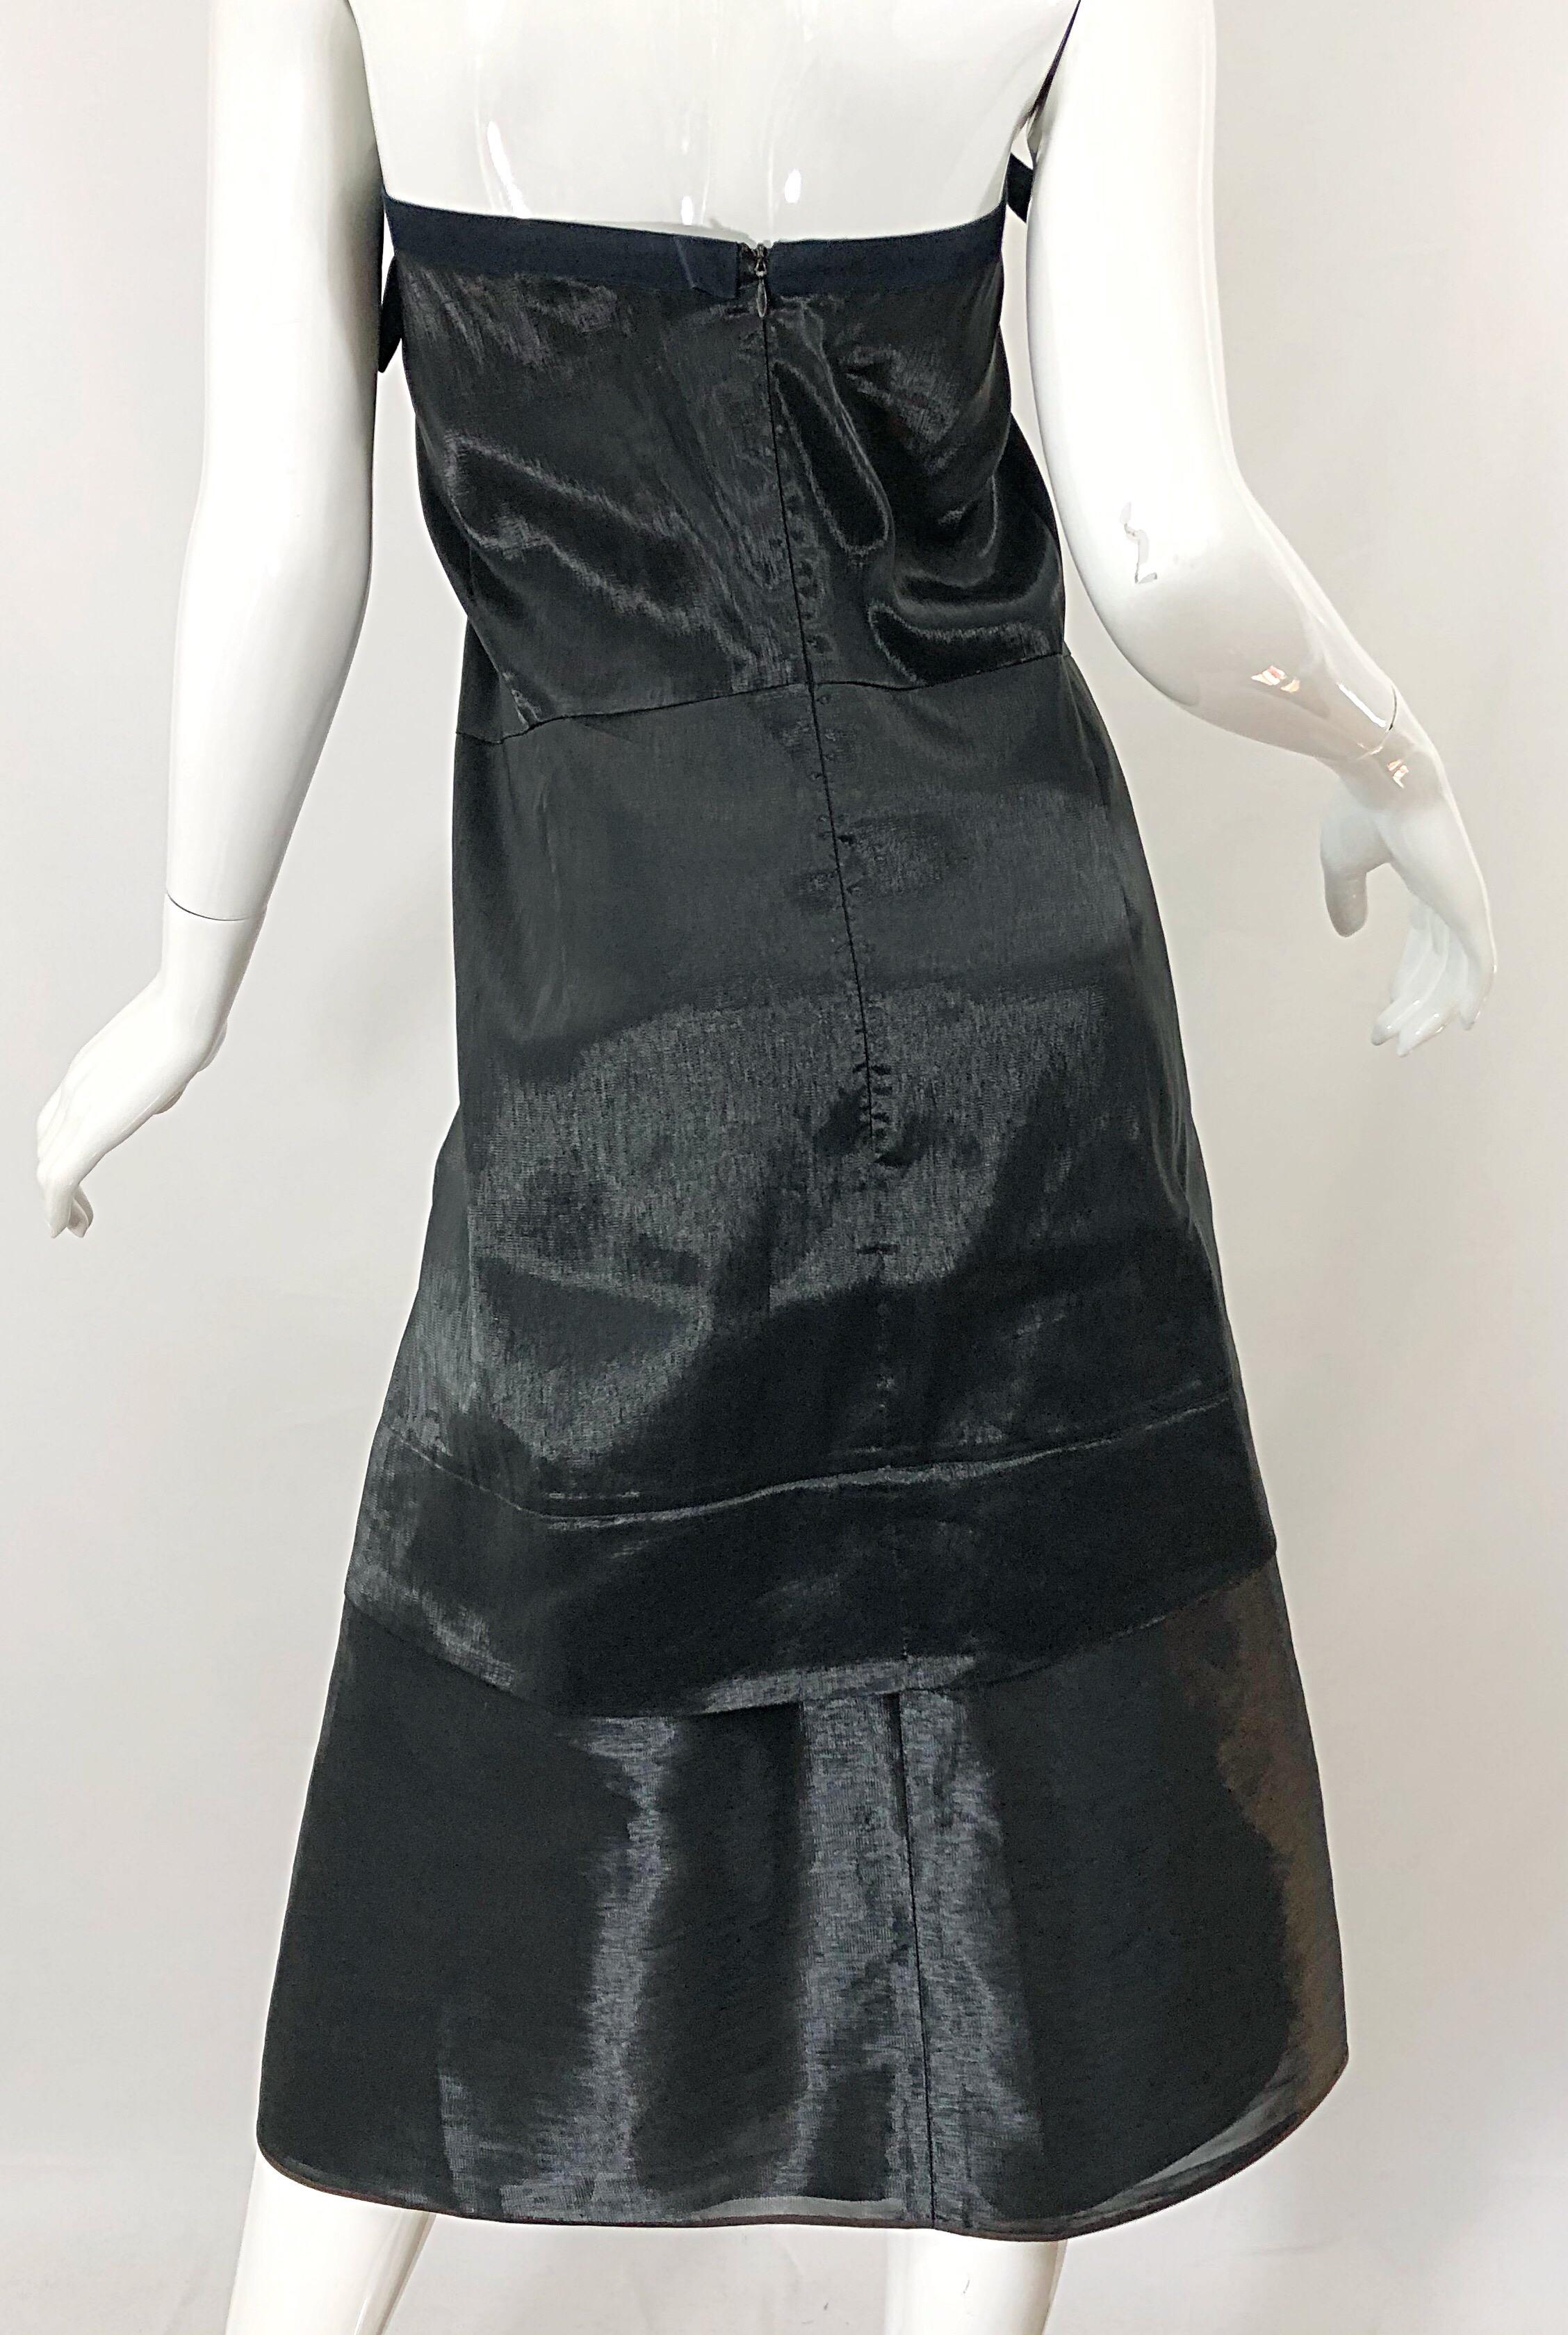 Jil Sander 90s Size 8 Vintage Black Metallic Avant Garde Strapless 1990s Dress For Sale 3